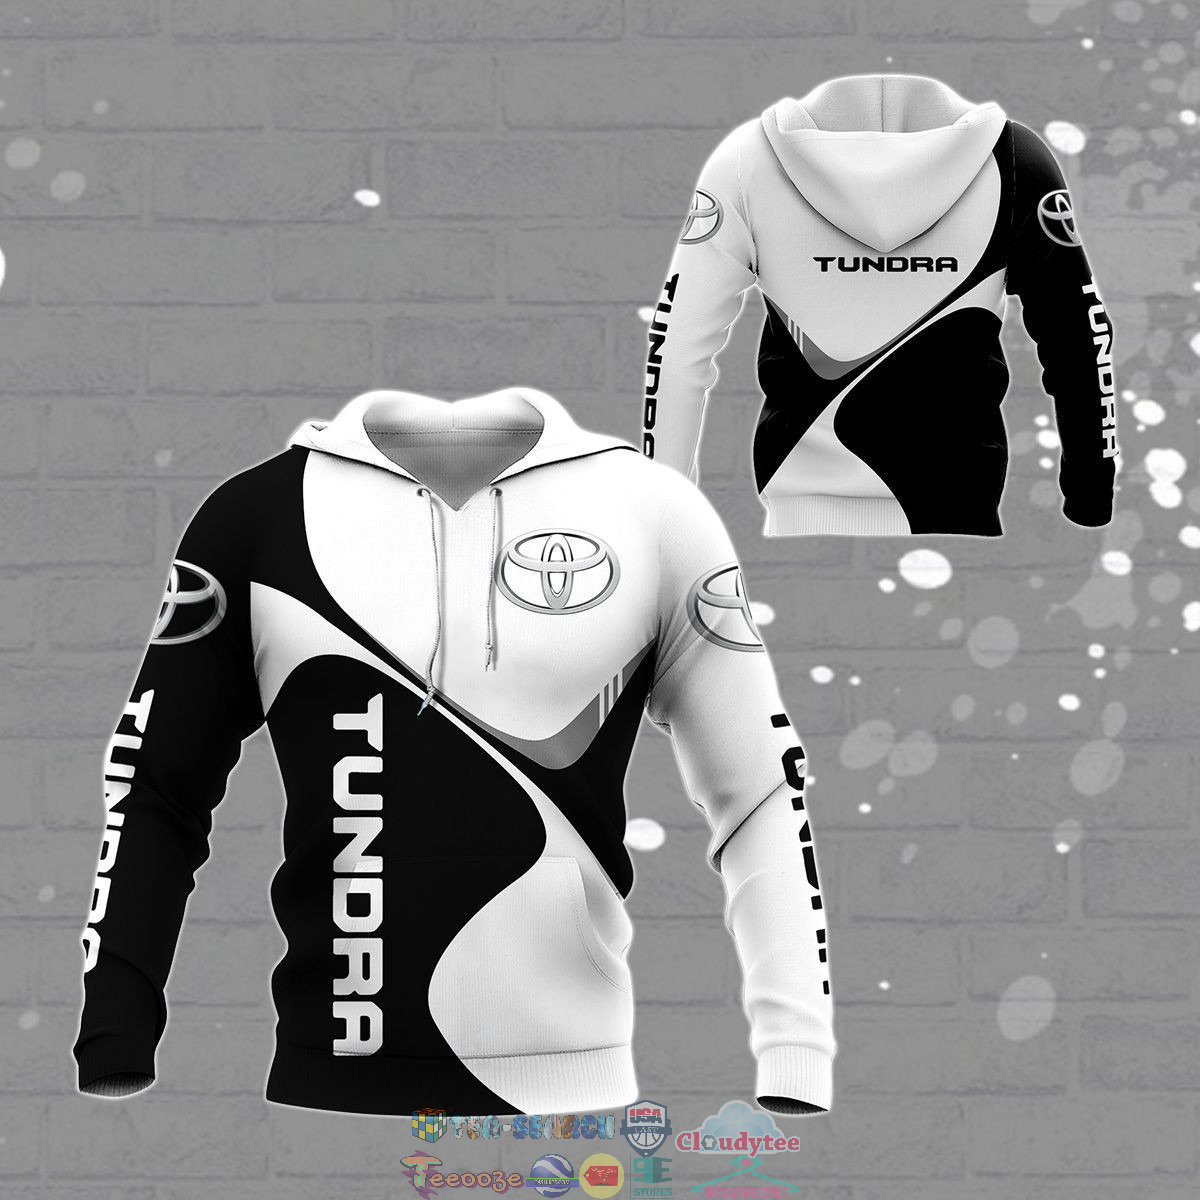 s2Au7eSk-TH030822-22xxxToyota-Tundra-ver-8-3D-hoodie-and-t-shirt3.jpg